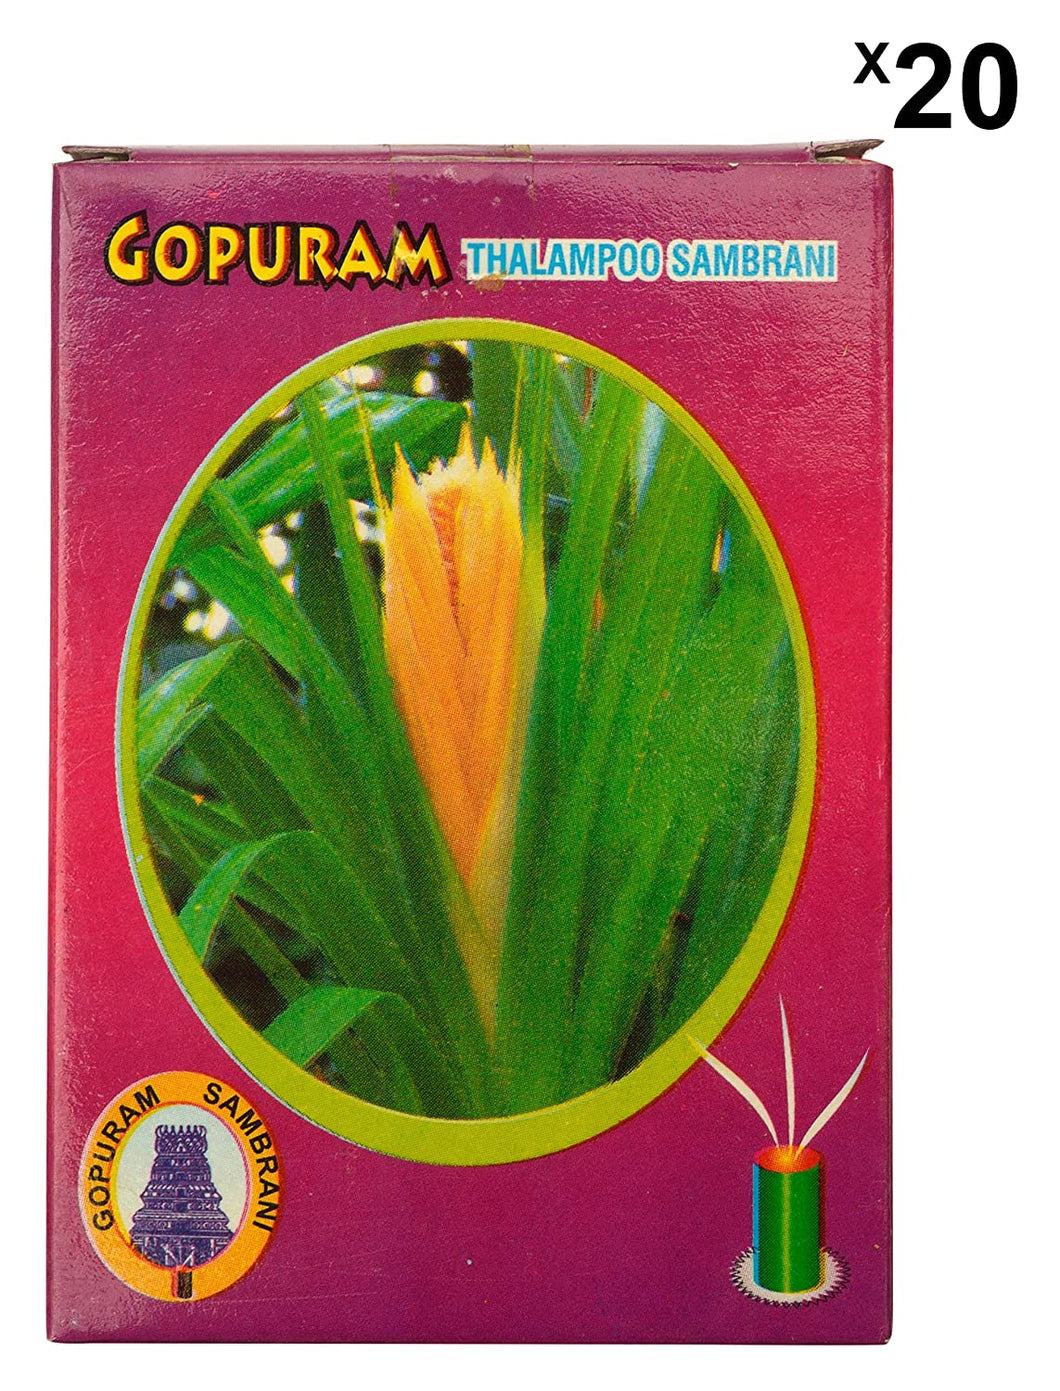 Gopuram Thalampoo Sambrani